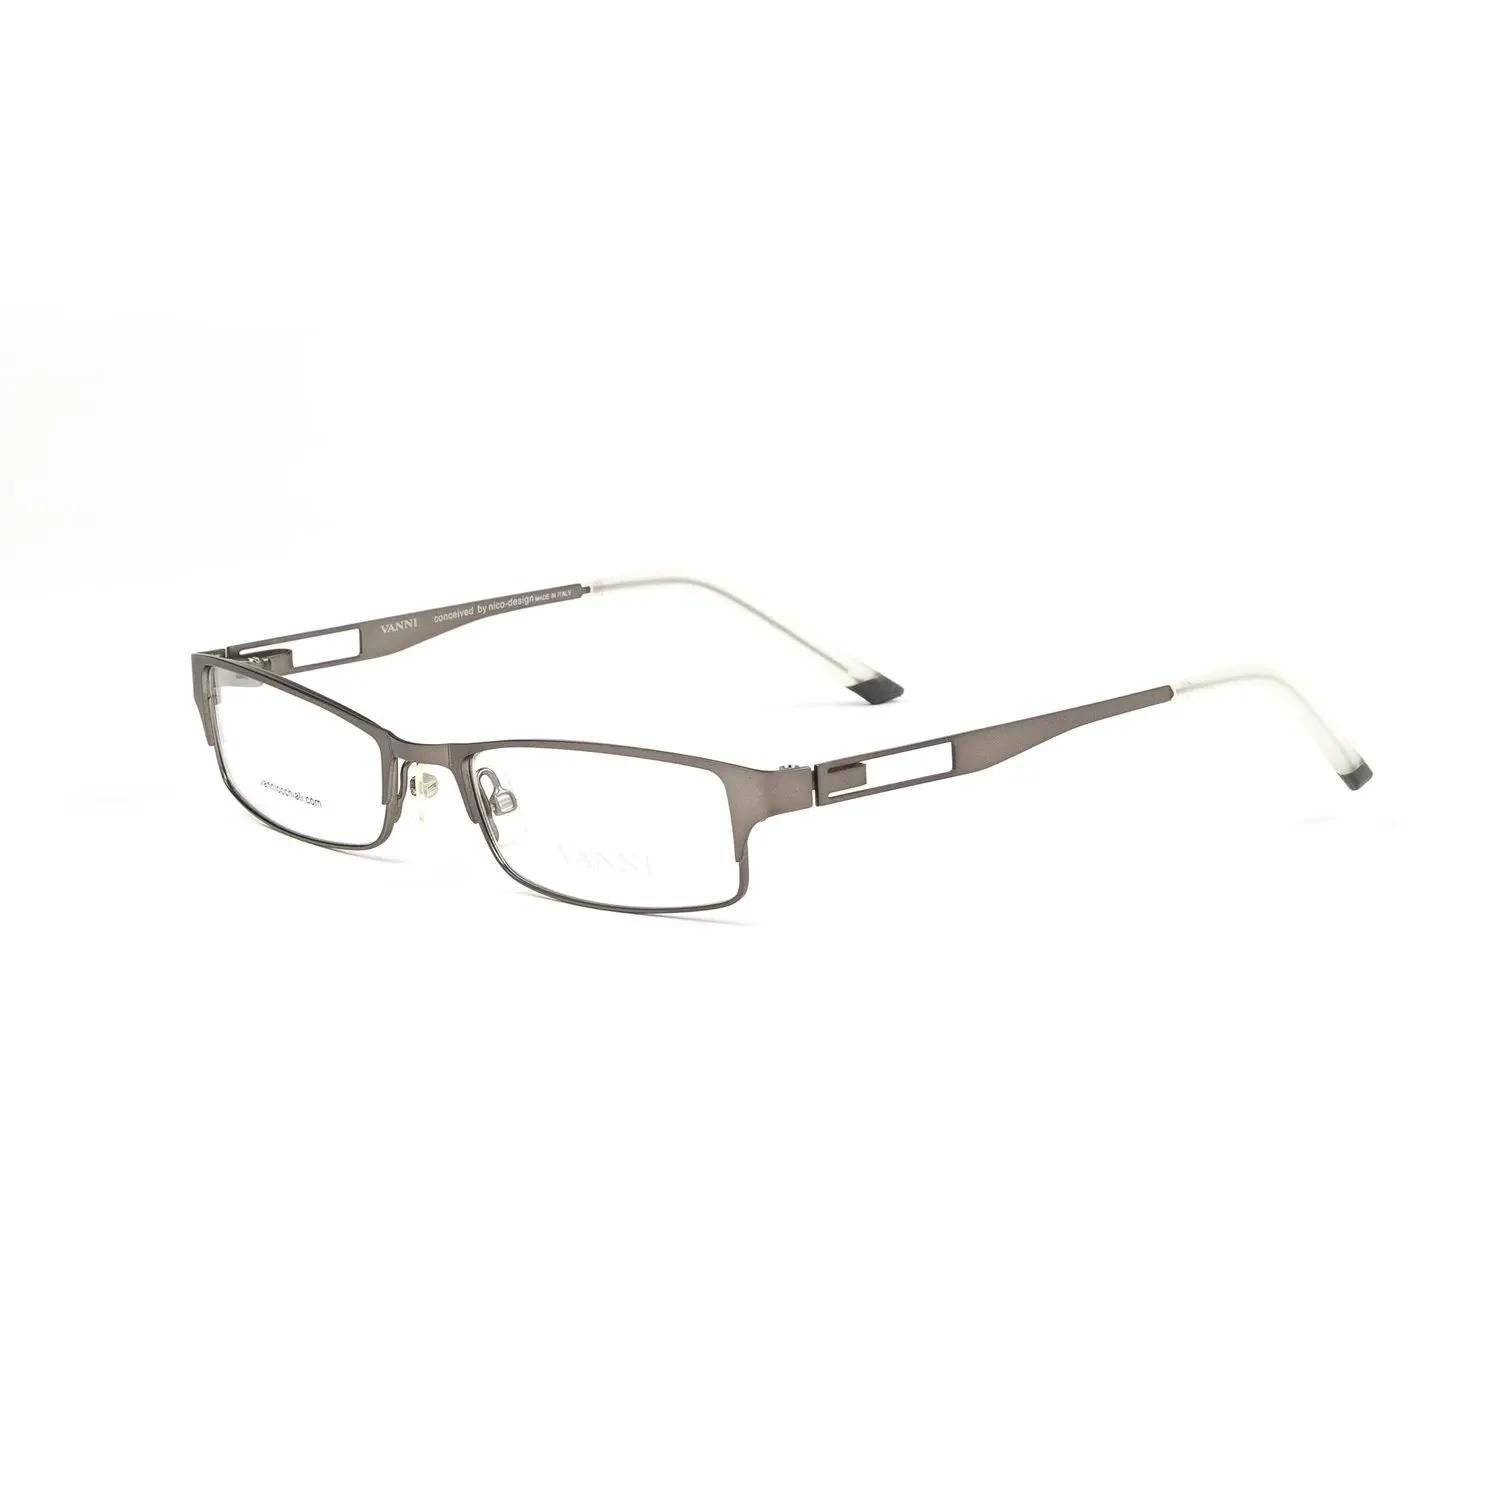 Cheap Gunmetal Eyeglass Frames, find Gunmetal Eyeglass Frames deals on ...